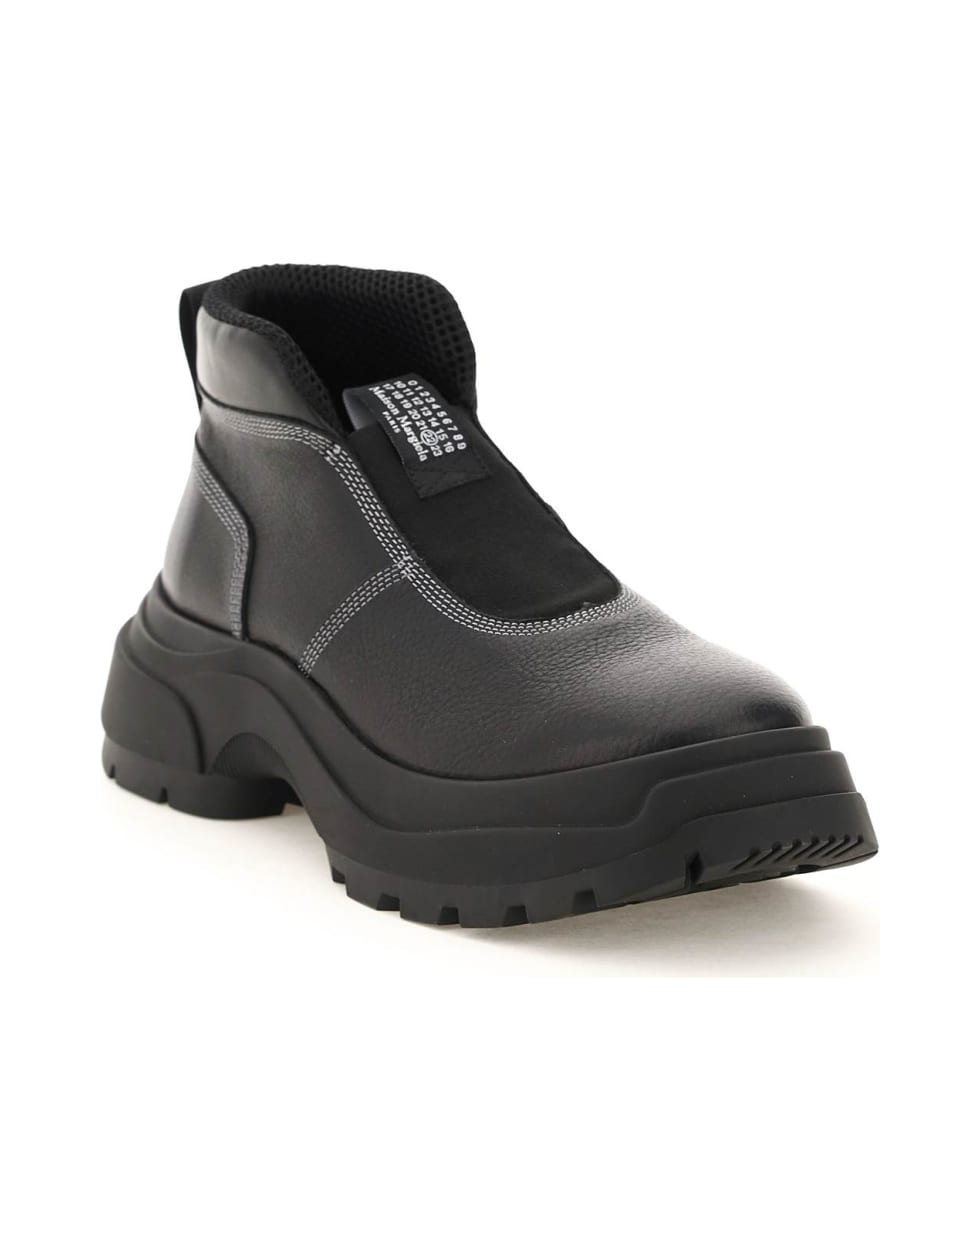 Maison Margiela Slip On Leather Sneakers - Black